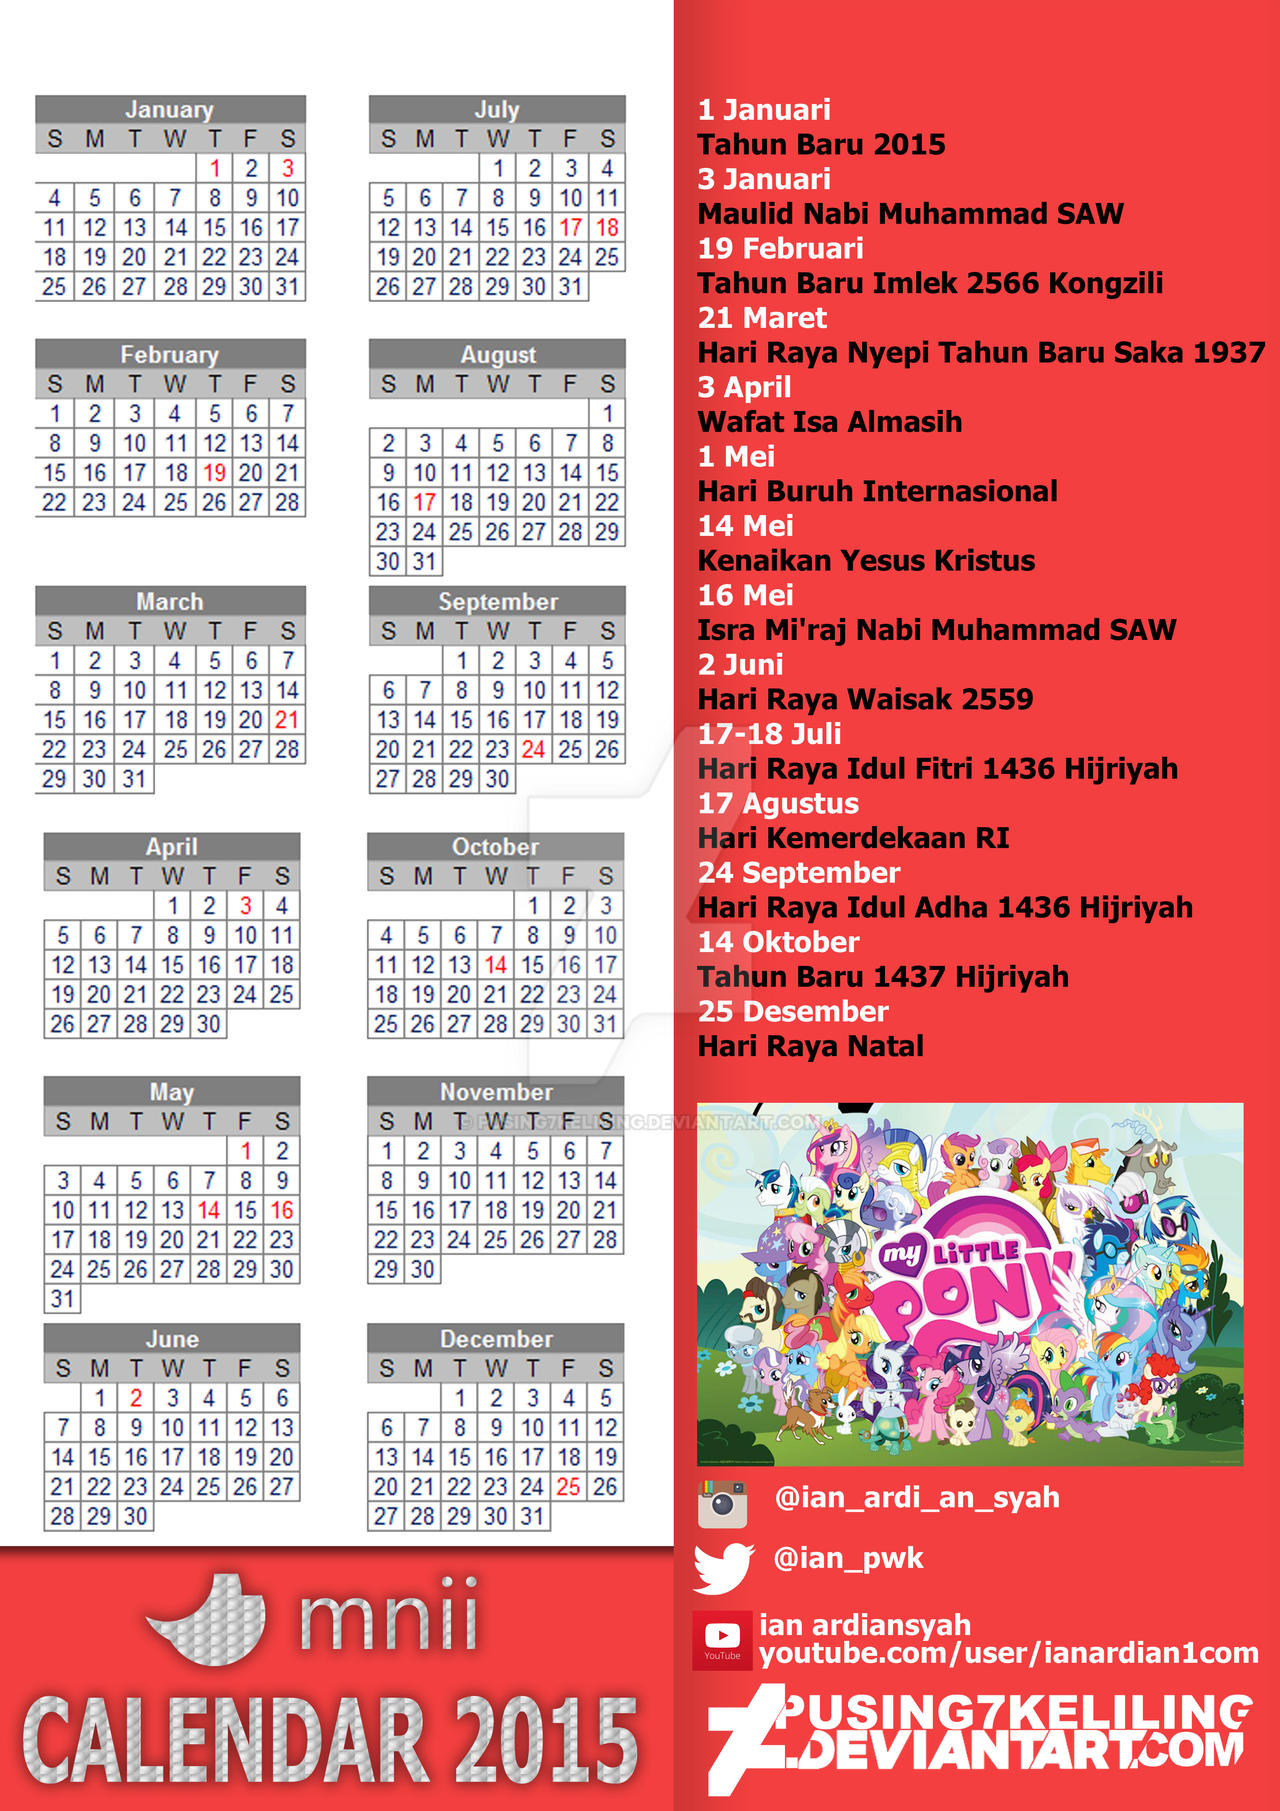 Kalender 201 5